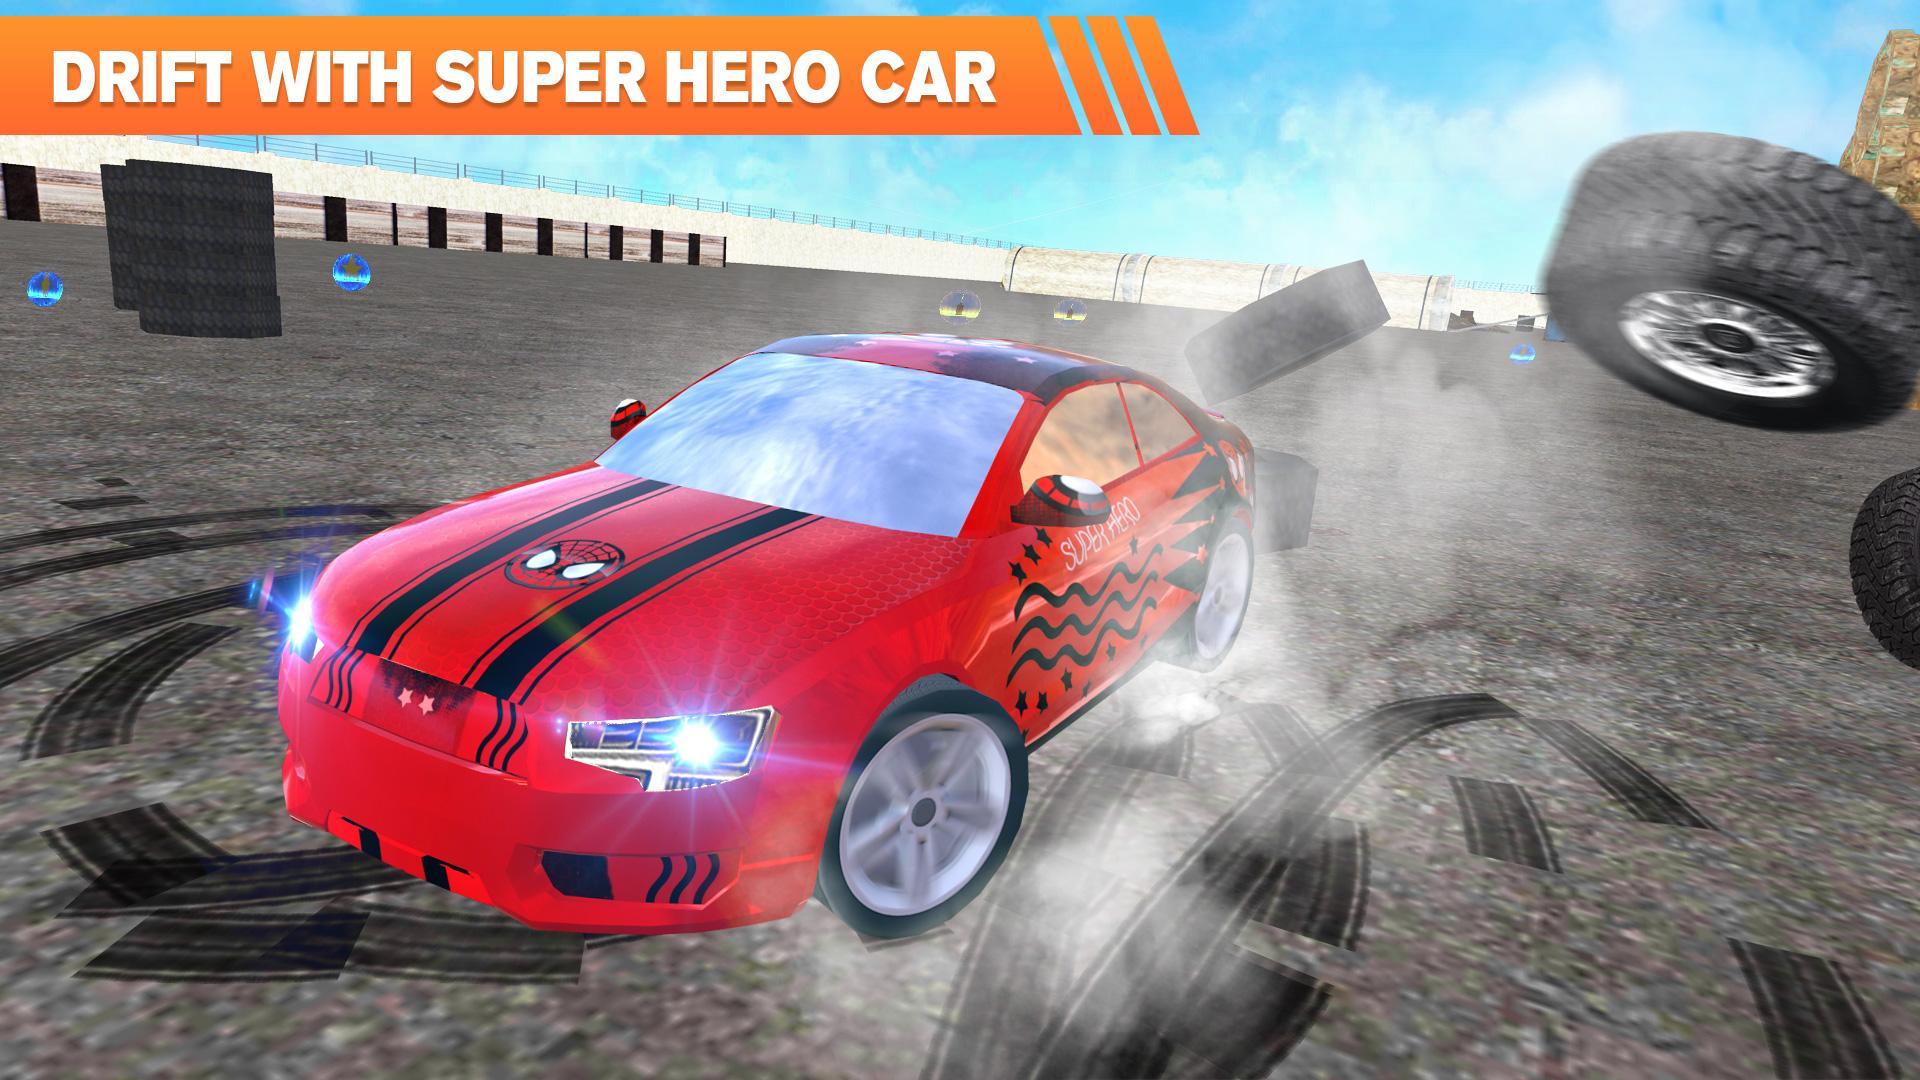 Super Hero Demolition Derby Car Crash Simulator For Android Apk Download - roblox car crash simulator group